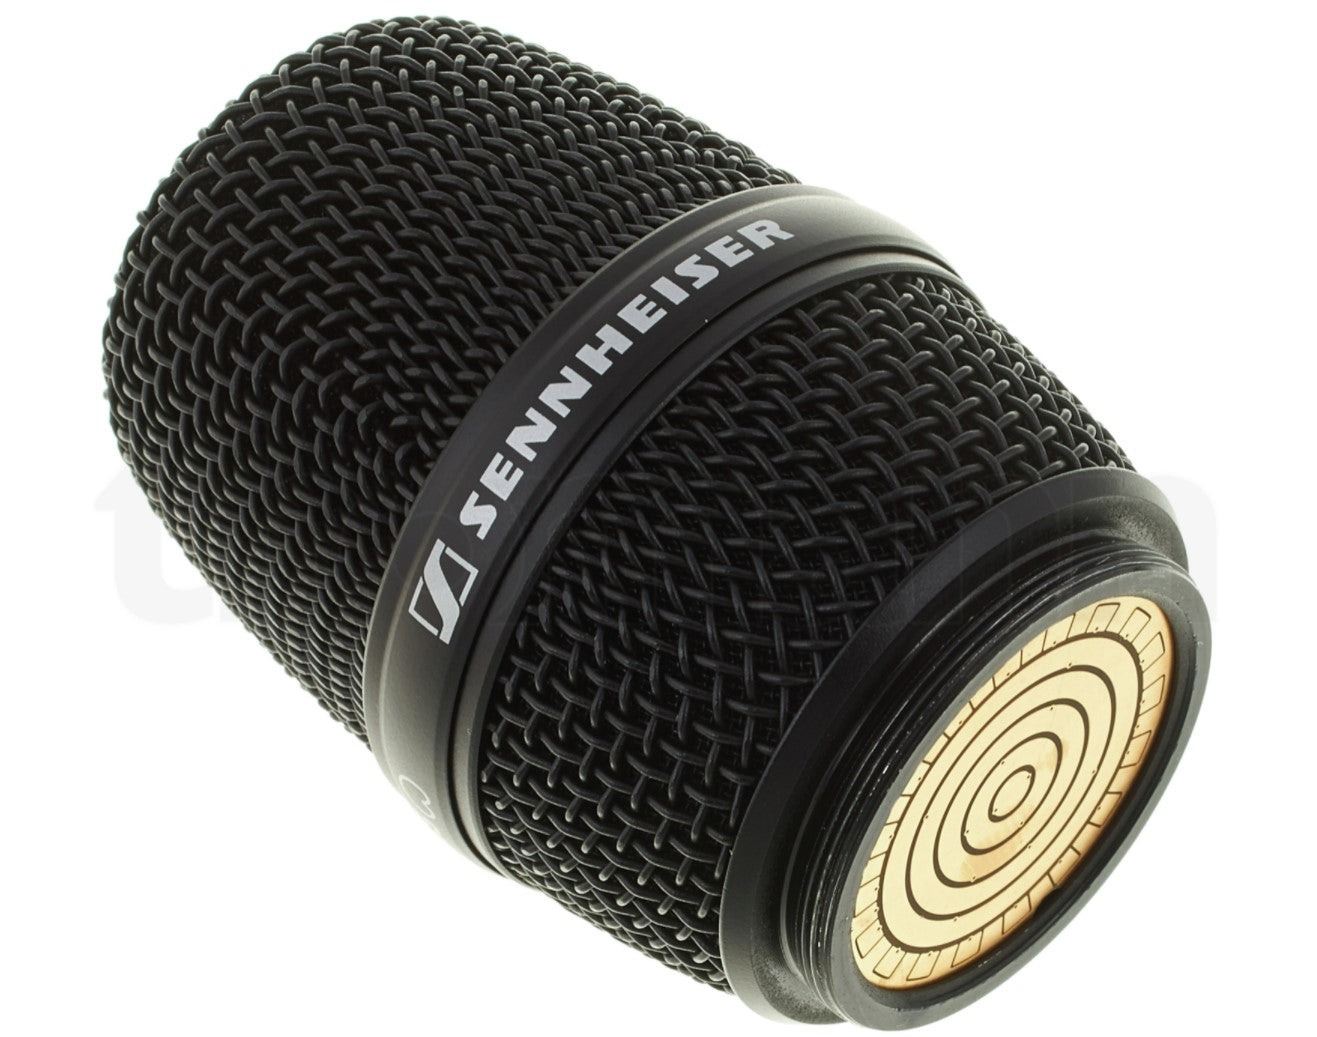 Sennheiser MME 865 Microphone Module Capsule Head Interchangeable Dynamic Supercardioid for SKM 2000, SKM 5000, SKM 5200 and G3 Series Wireless Handheld Transmitters